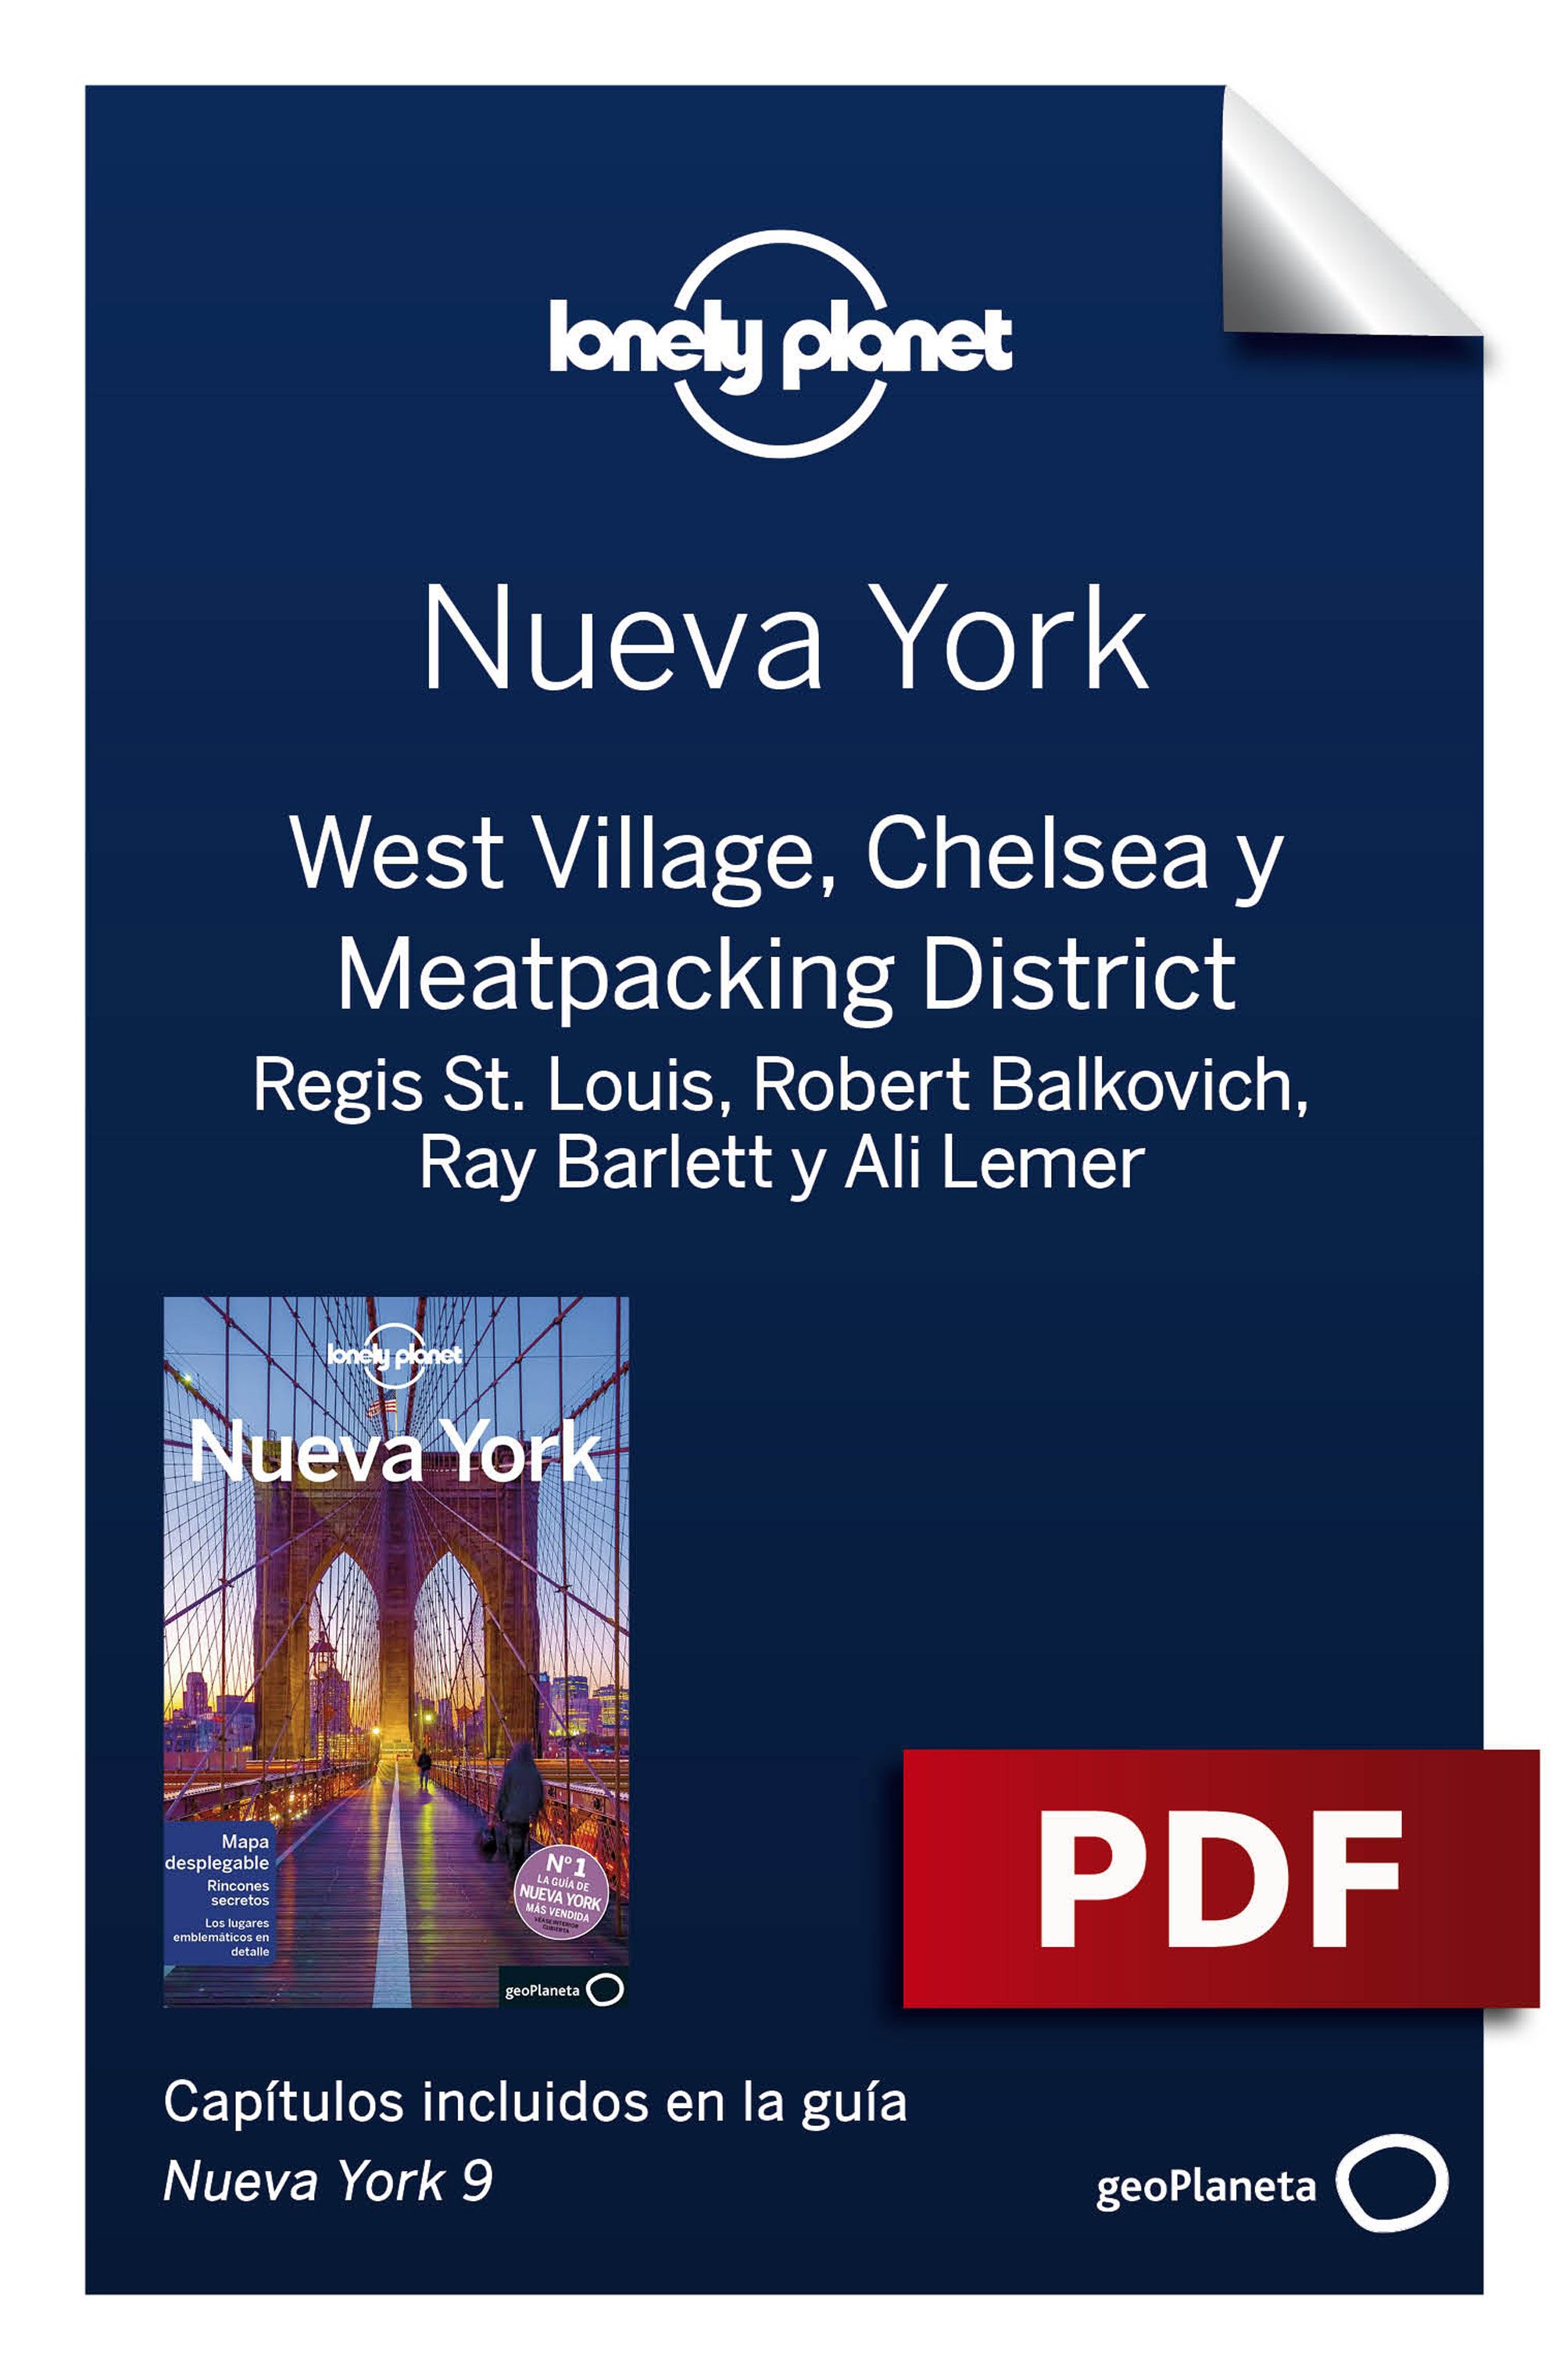 West Village, Chelsea y Meatpacking District